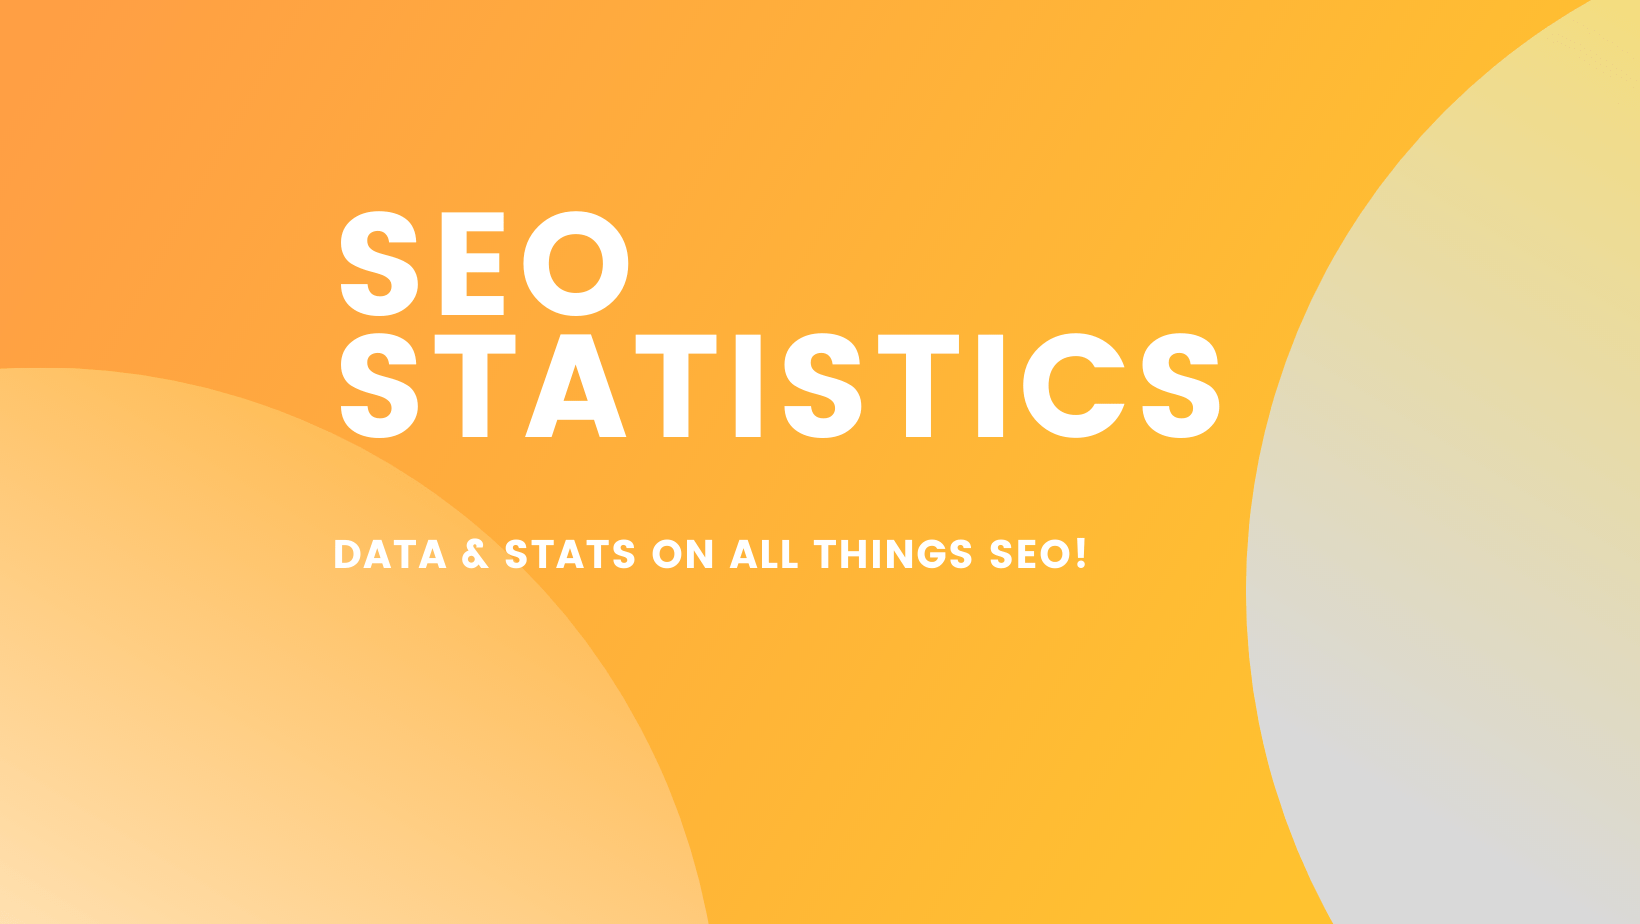 SEO Statistics Image